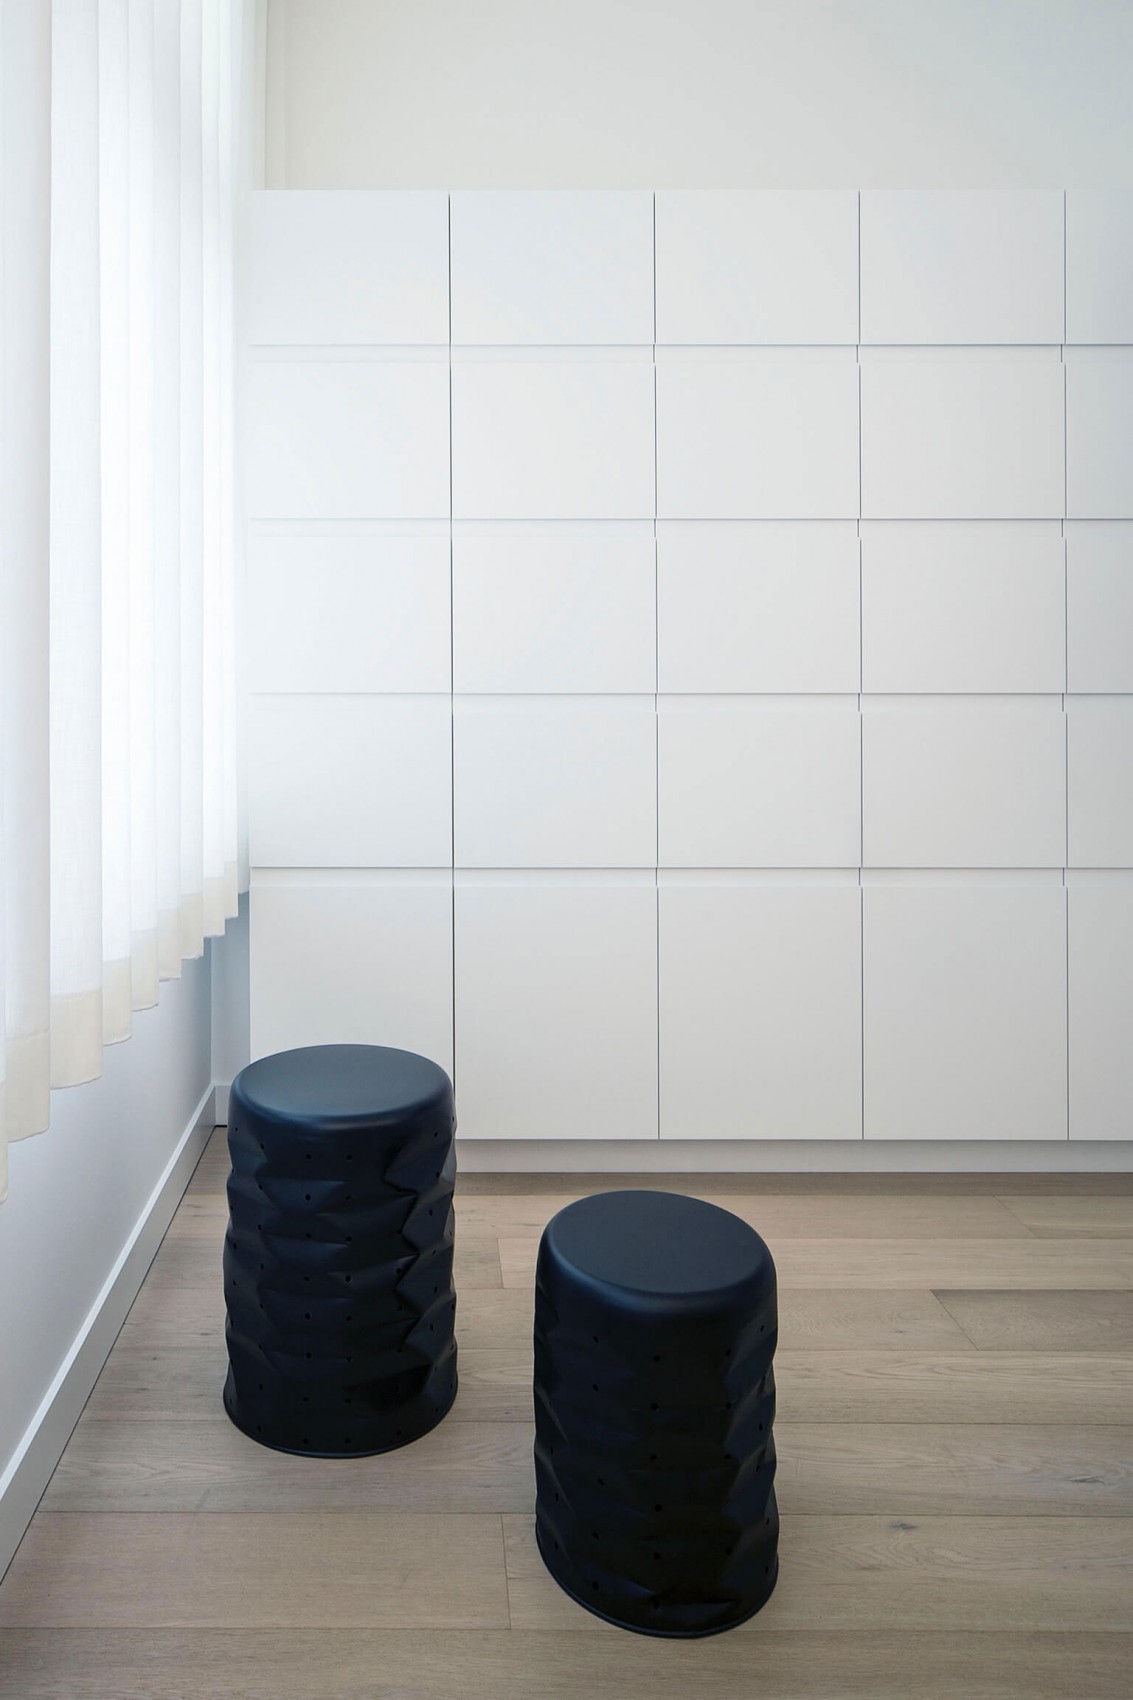 Furniture in minimalist apartment by Filip Deslee